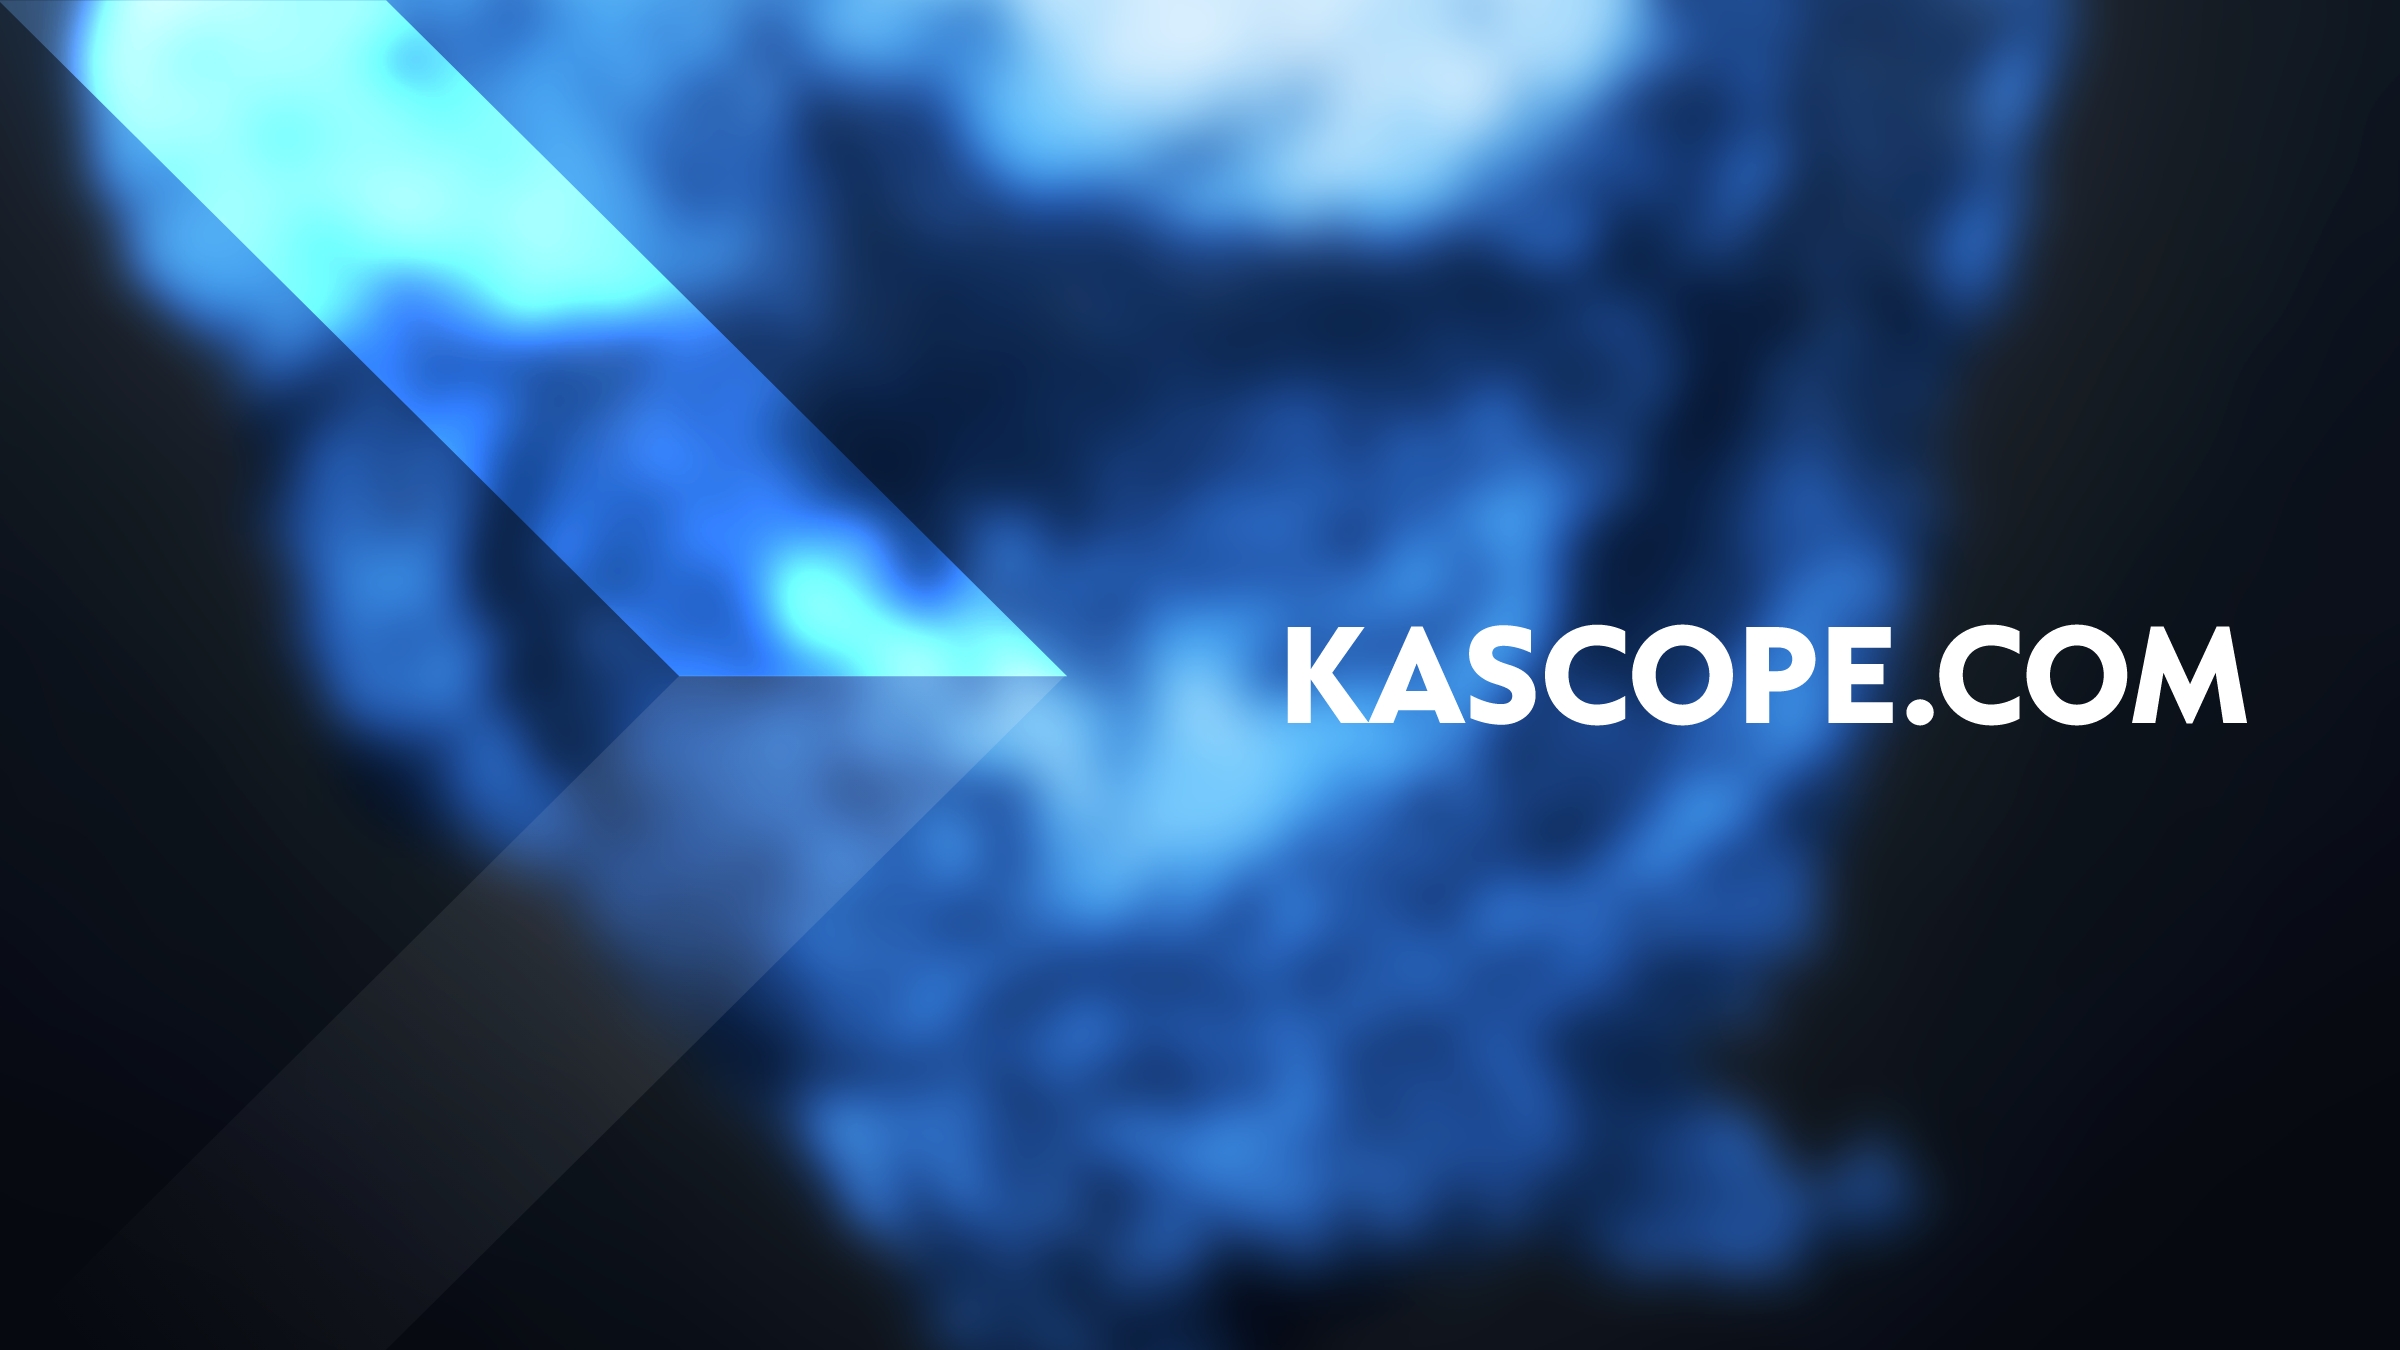 www.kascope.com